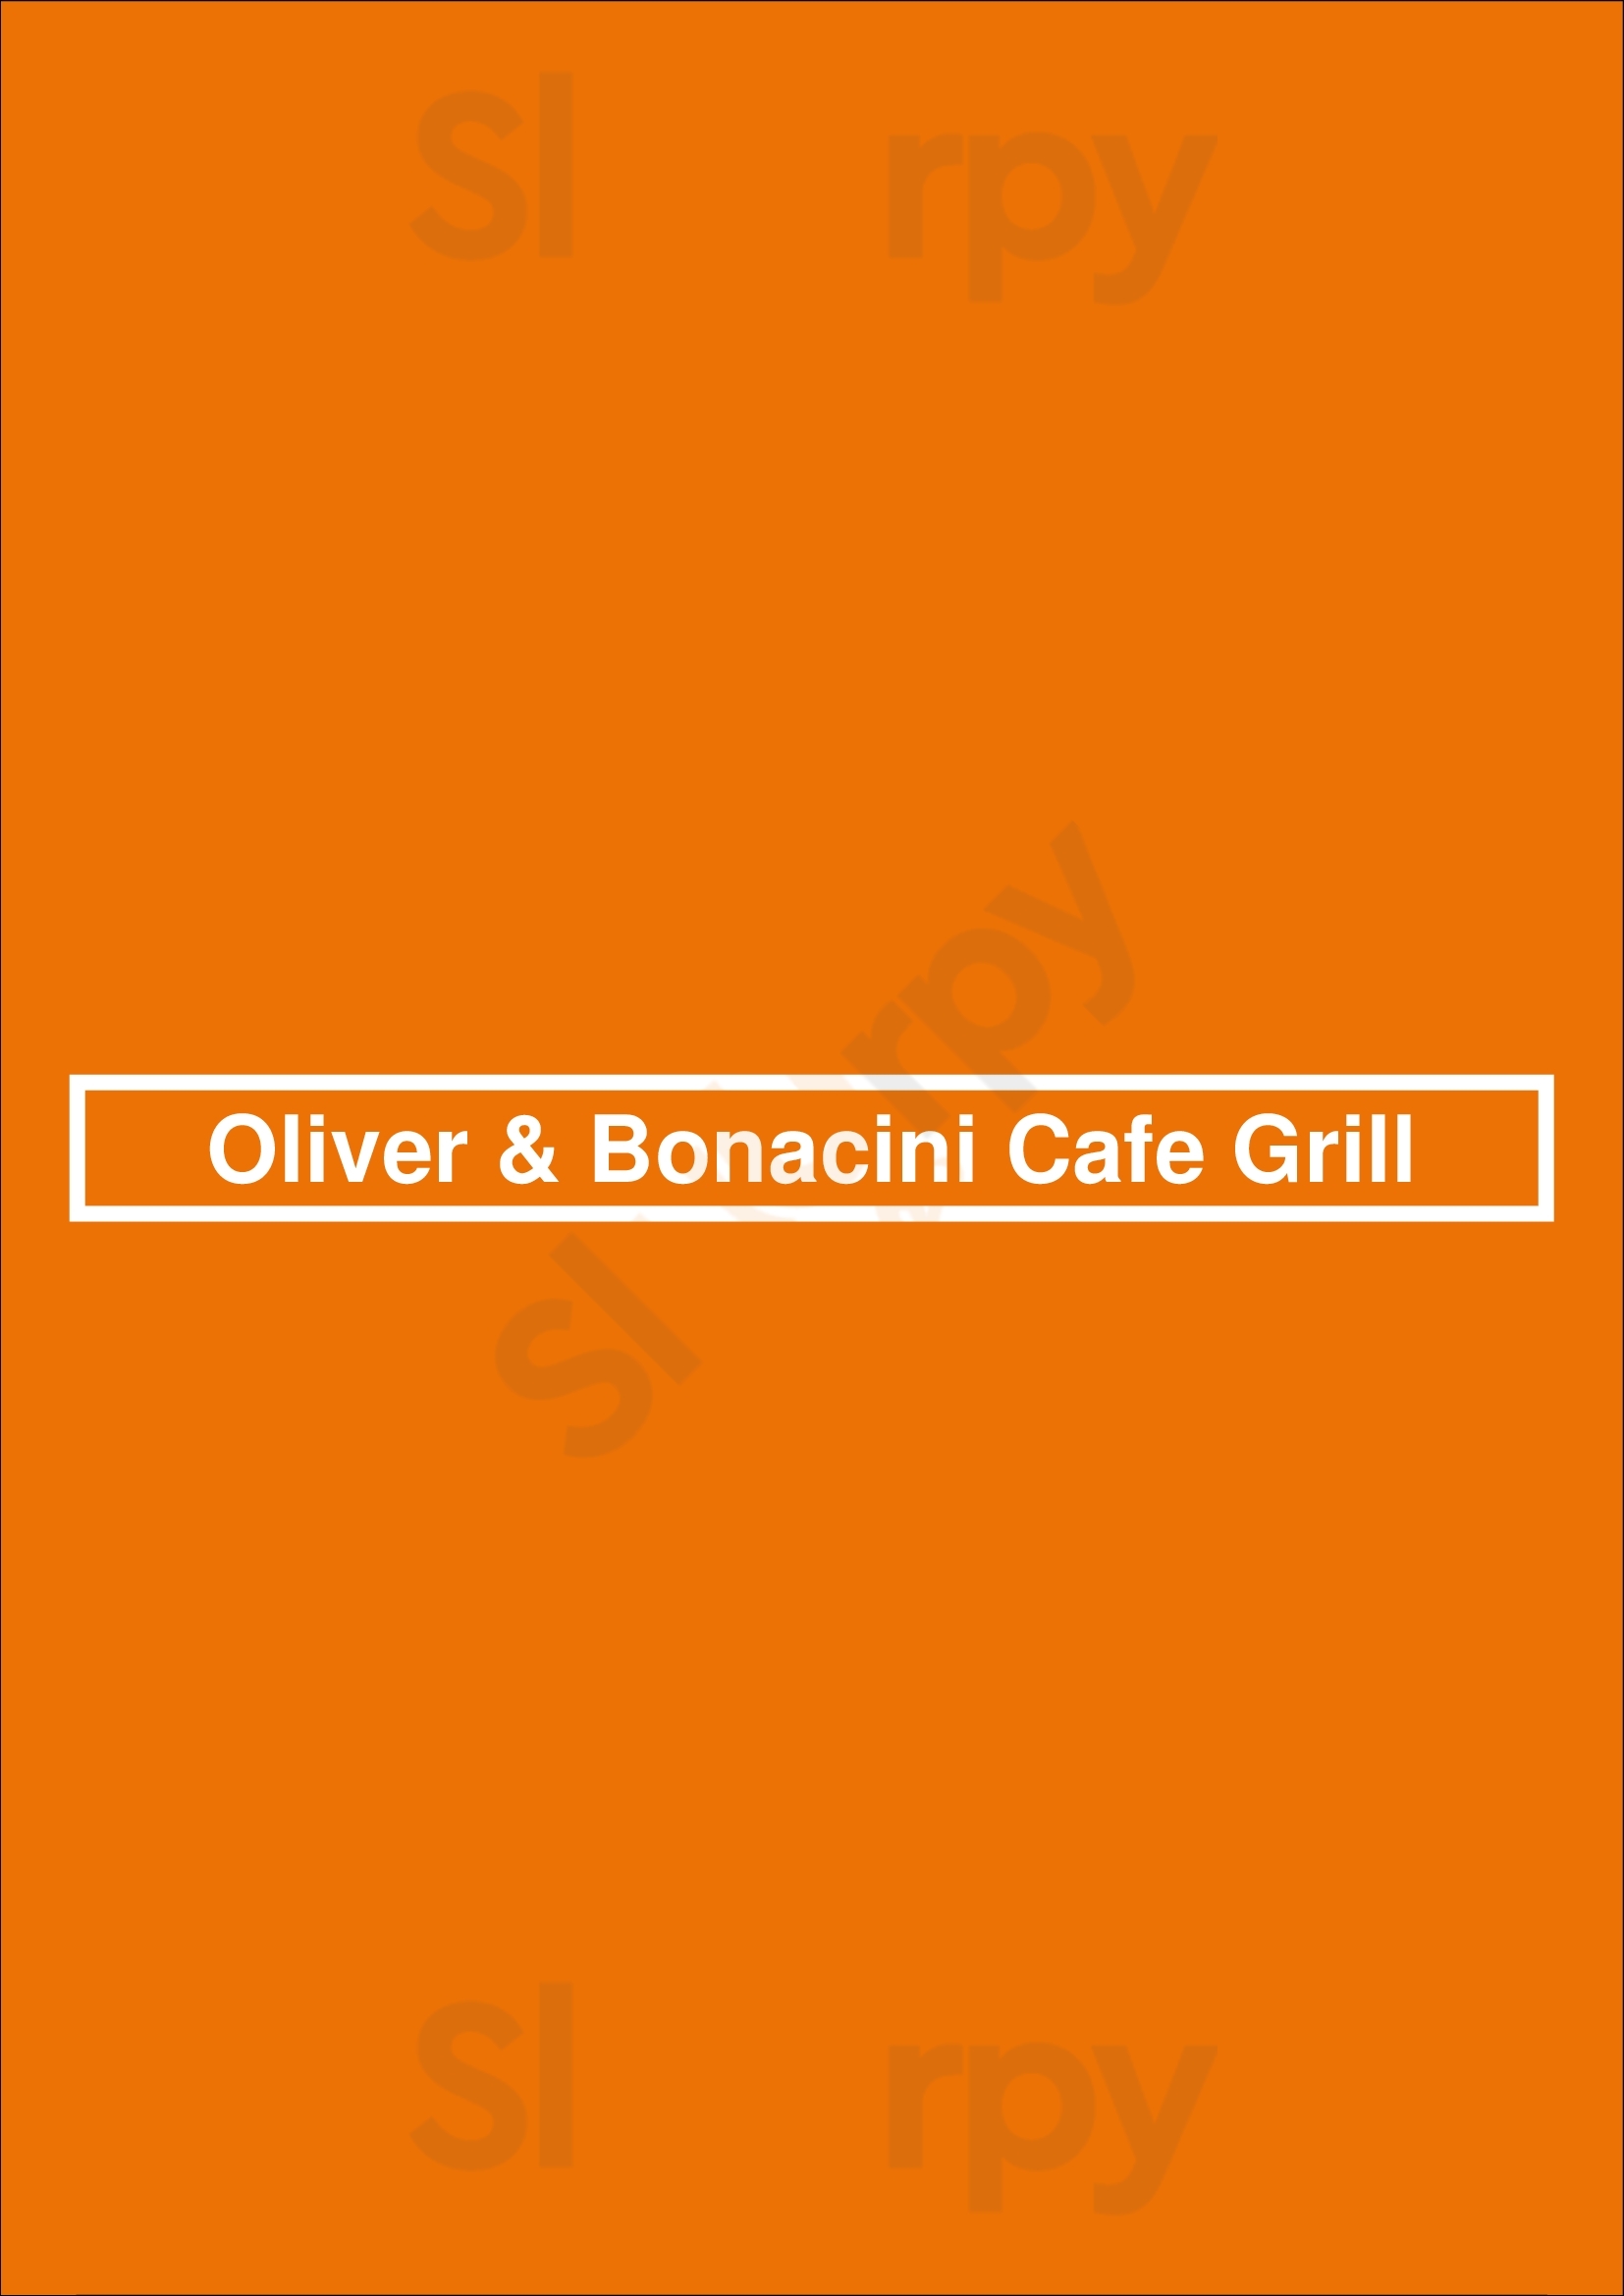 Oliver & Bonacini Cafe Grill Toronto Menu - 1